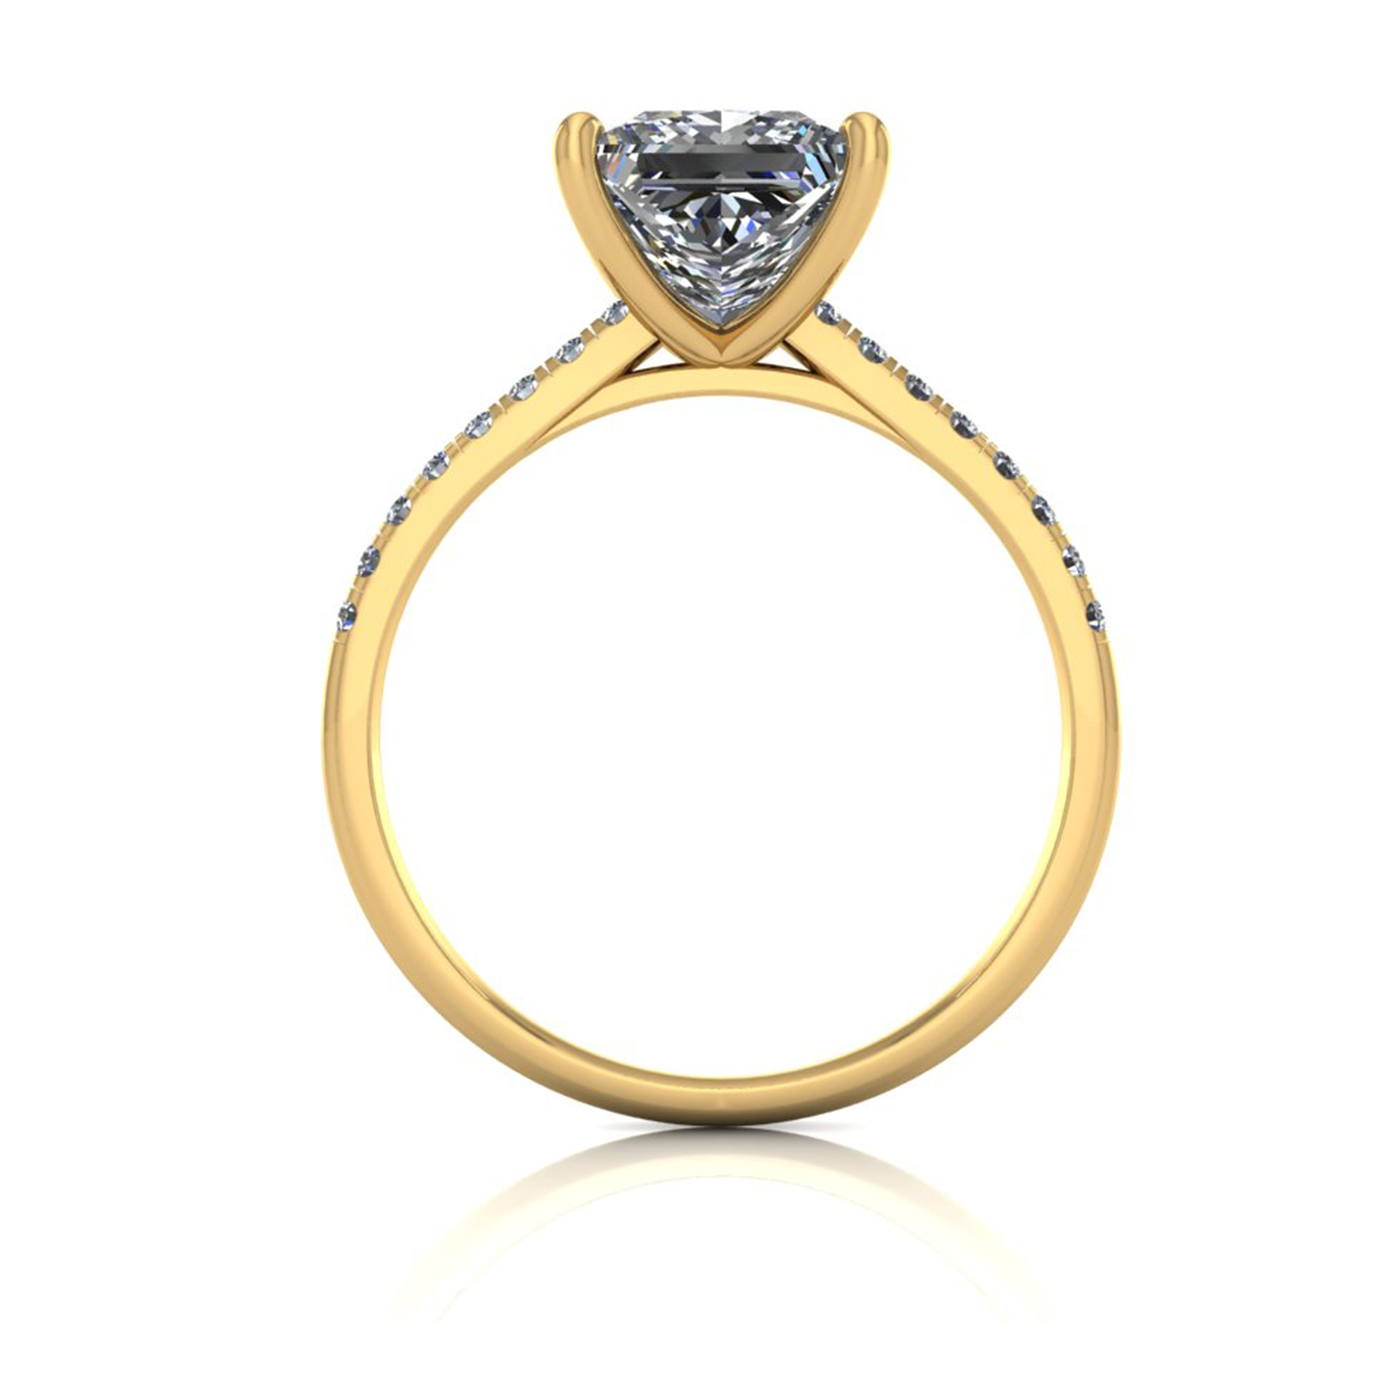 18k yellow gold  2,00 ct 4 prongs princess cut diamond engagement ring with whisper thin pavÉ set band